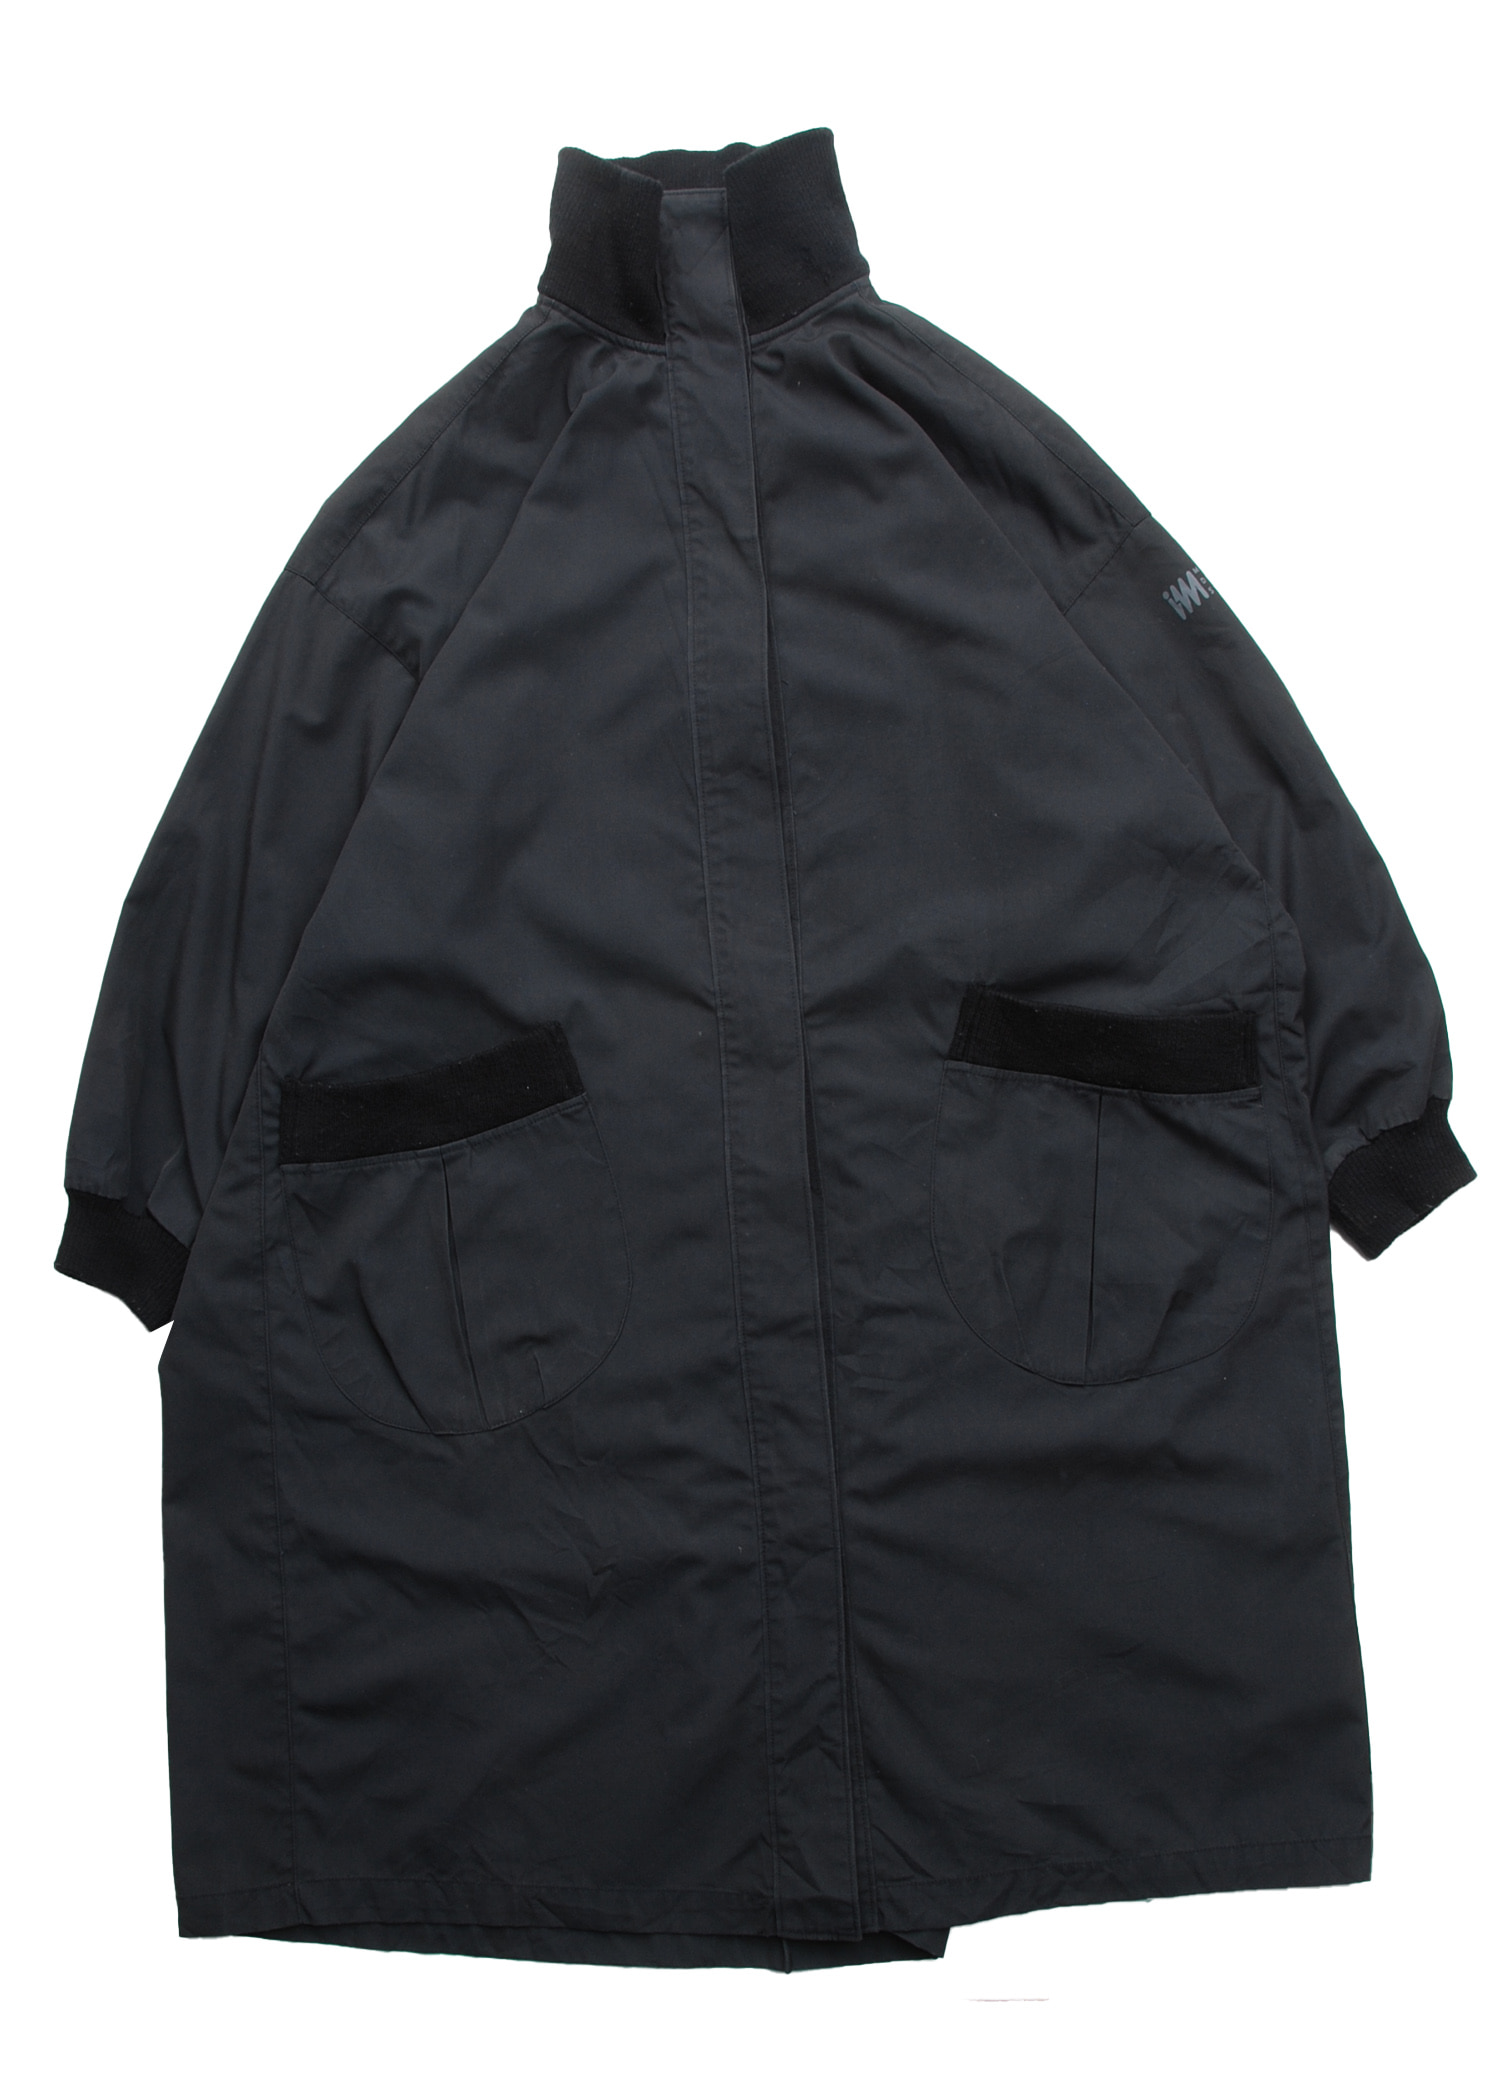 ISSEY MIYAKE studio overfit coat